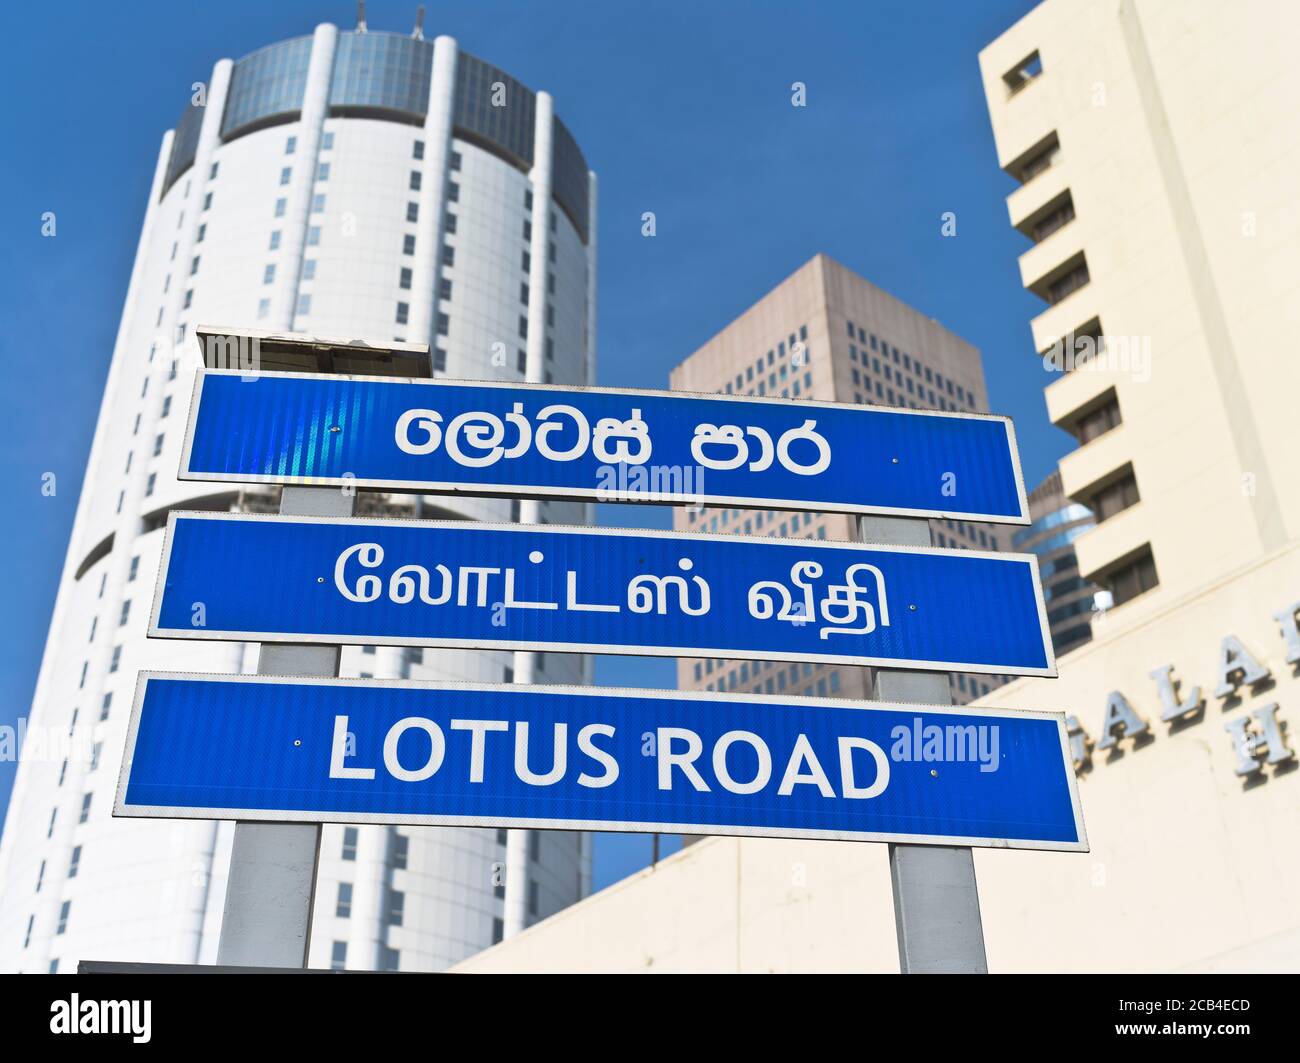 dh Lotus Road cartello COLOMBO CITY SRI LANKA multilingue Segni trilingue tre lingue Sinhala Tamil lingua inglese Foto Stock